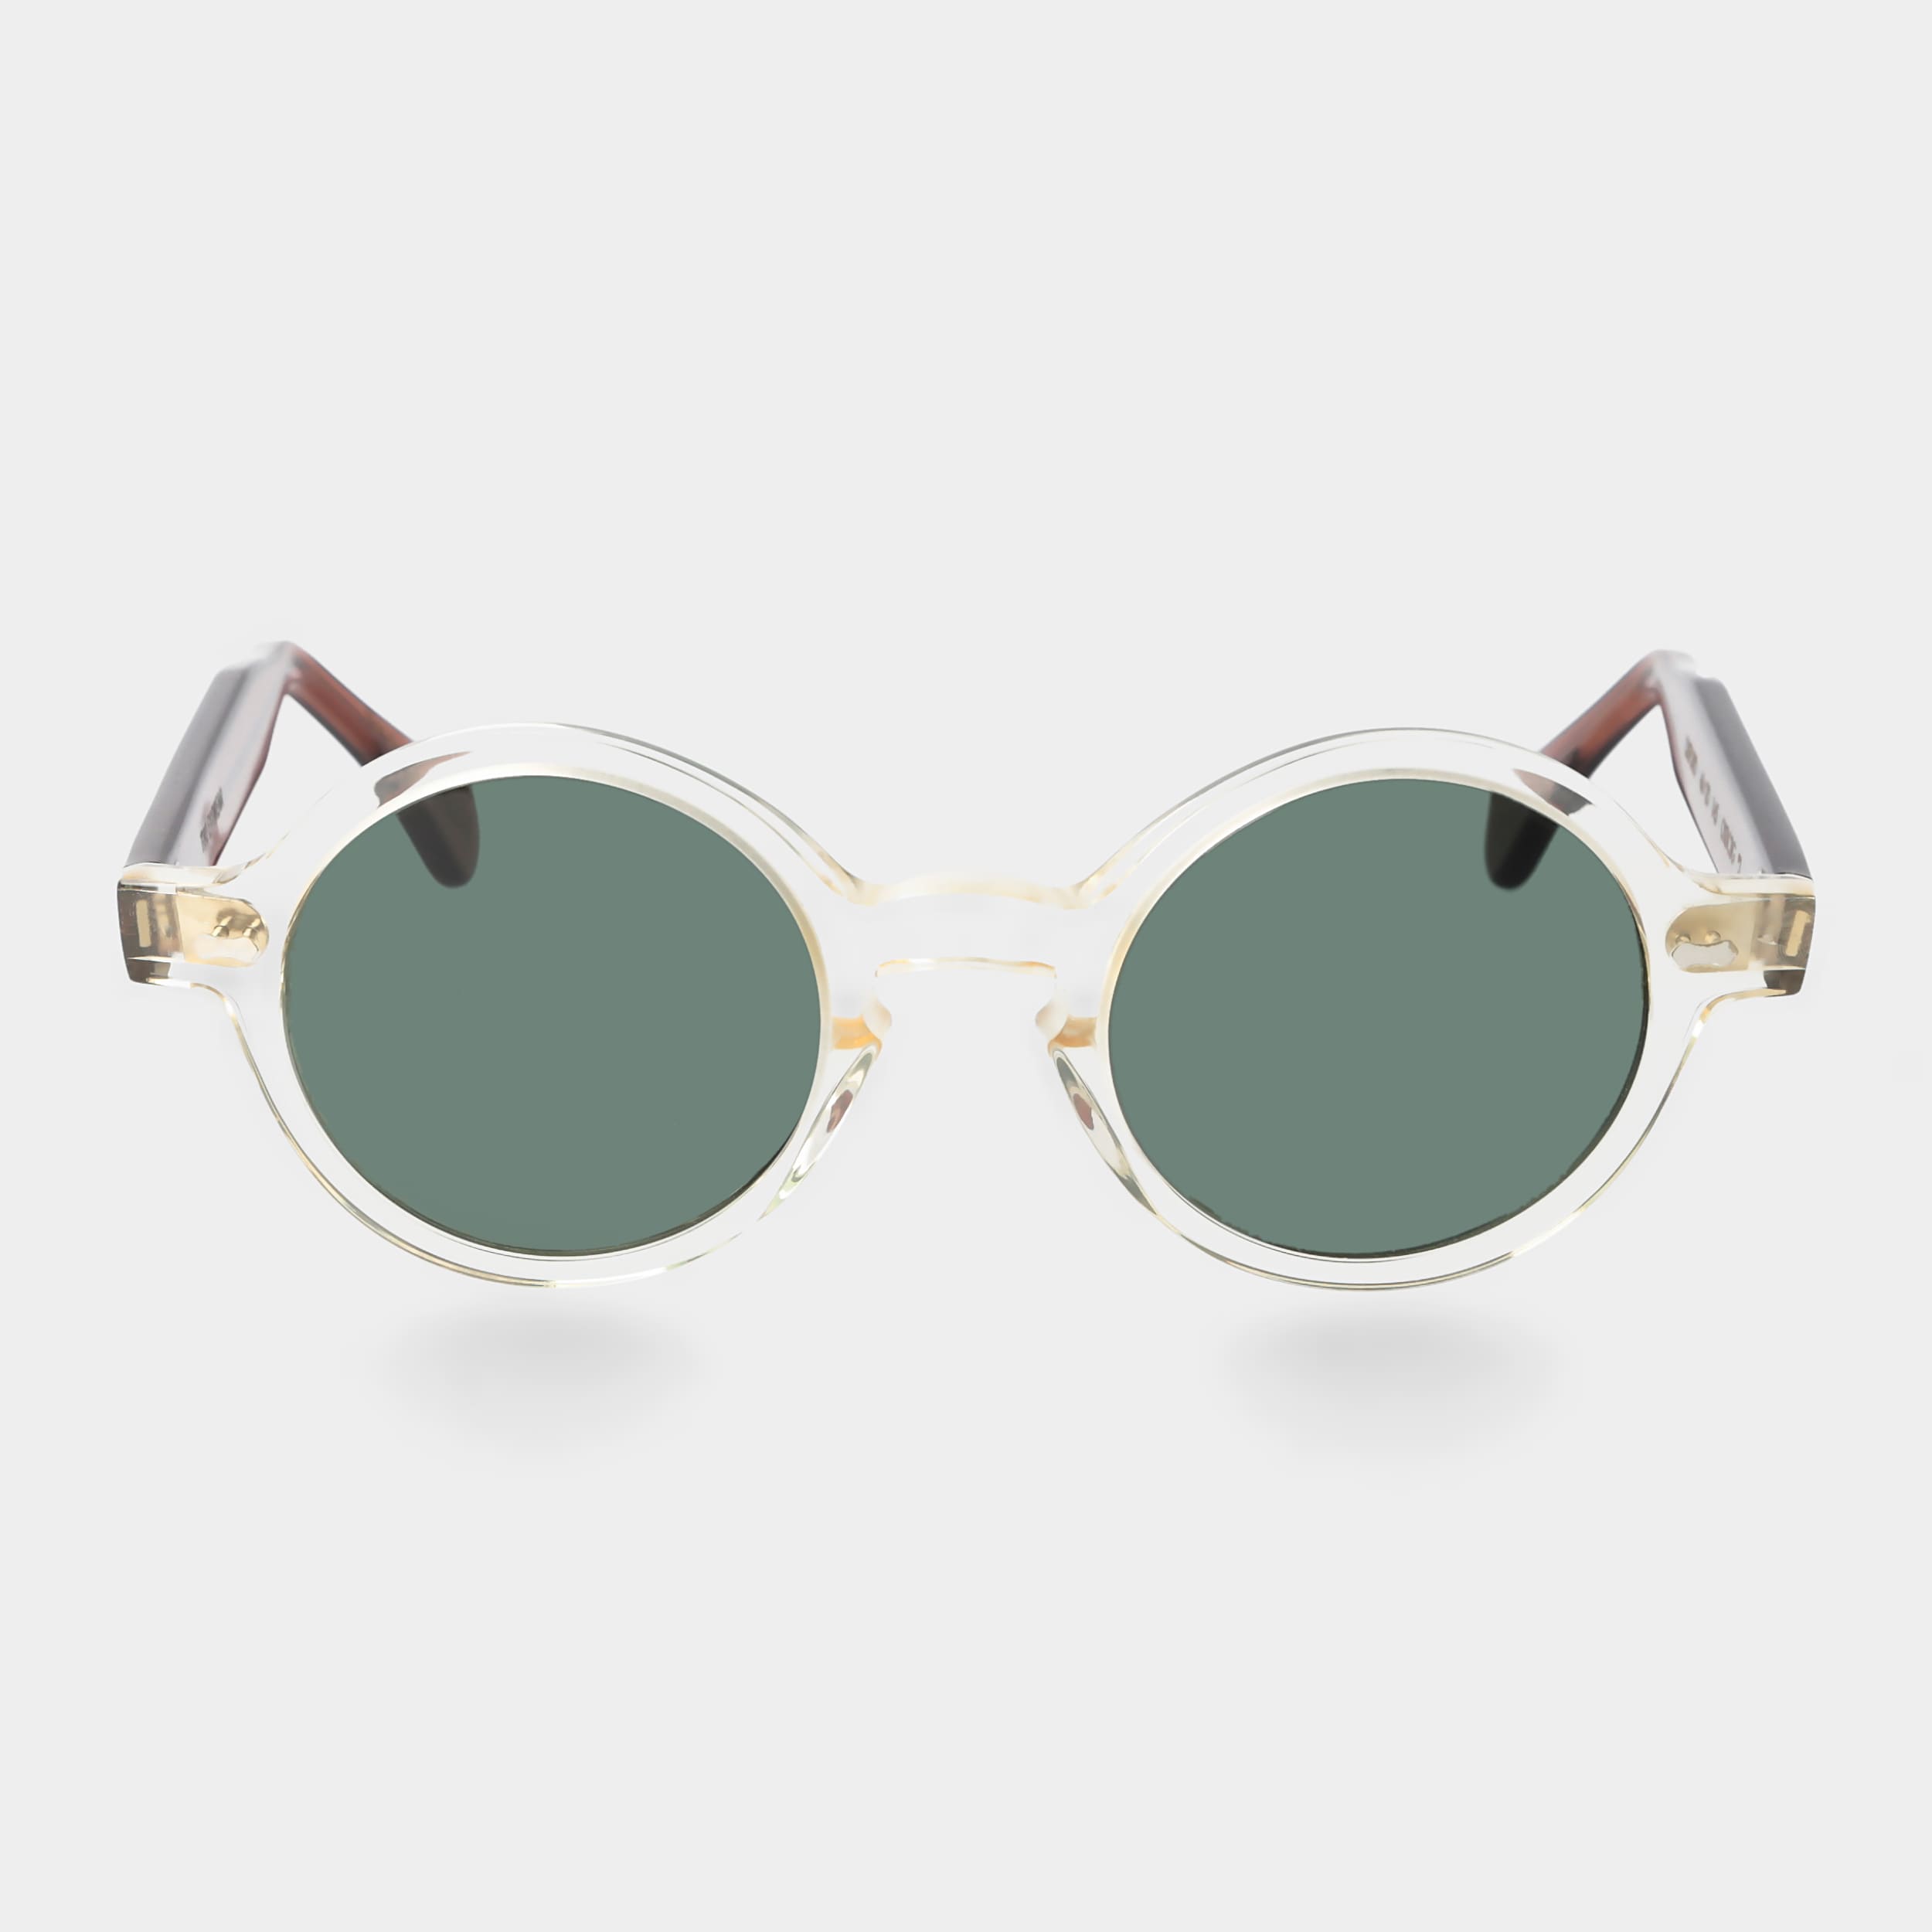 sunglasses-oxford-bicolor-bottle-green-tbd-eyewear-front